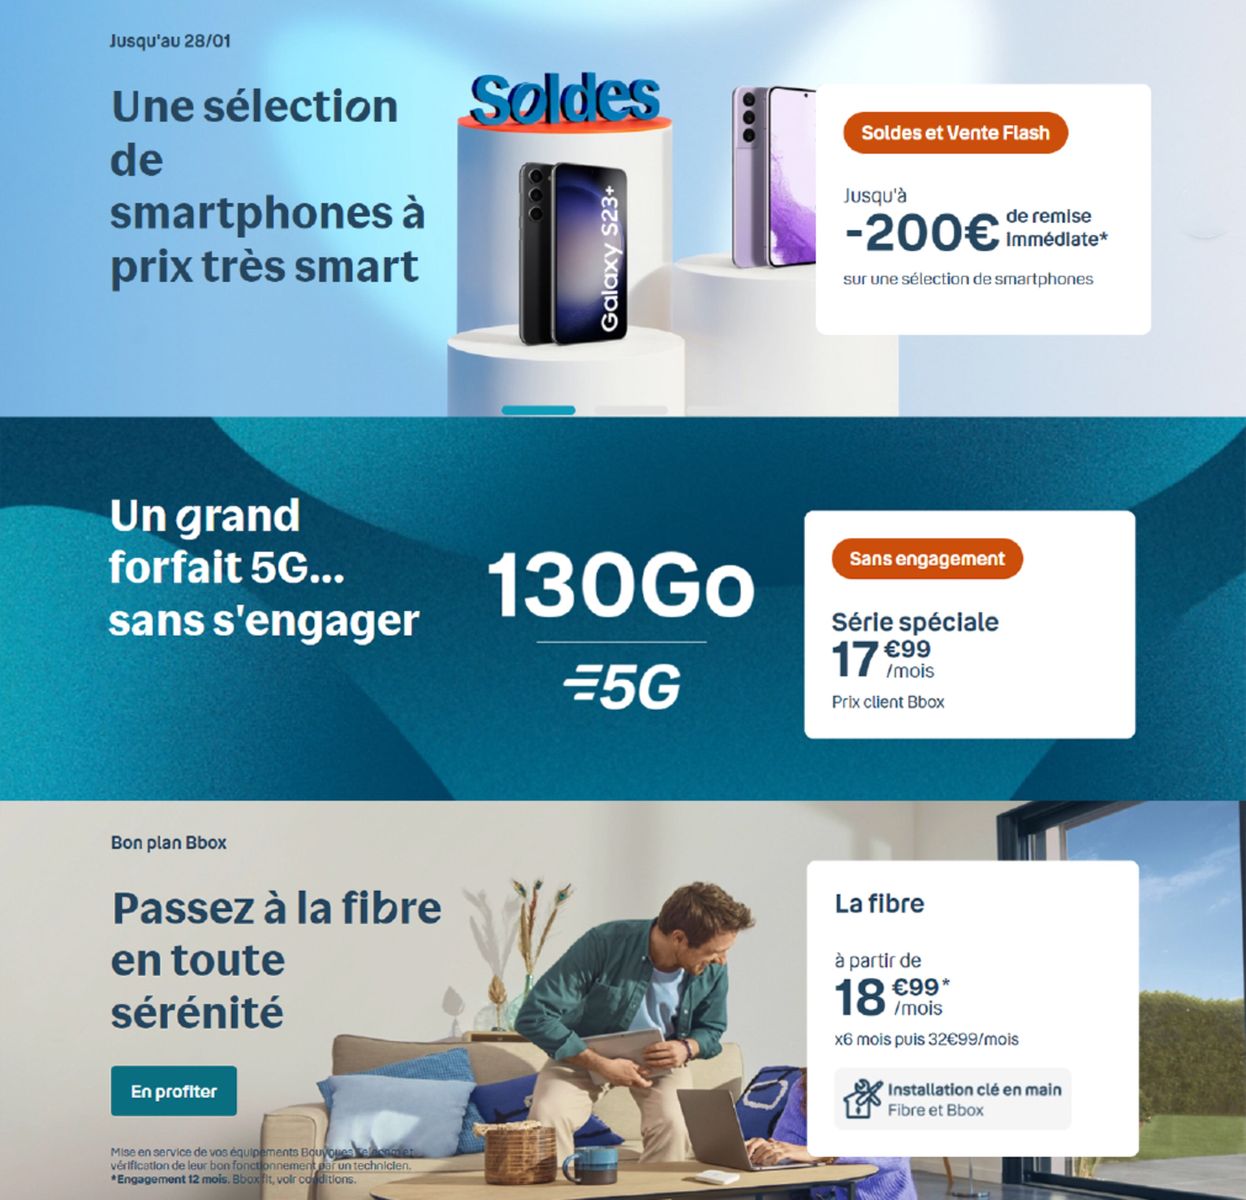 Catalogue Offres Bouygues Telecom, page 00001